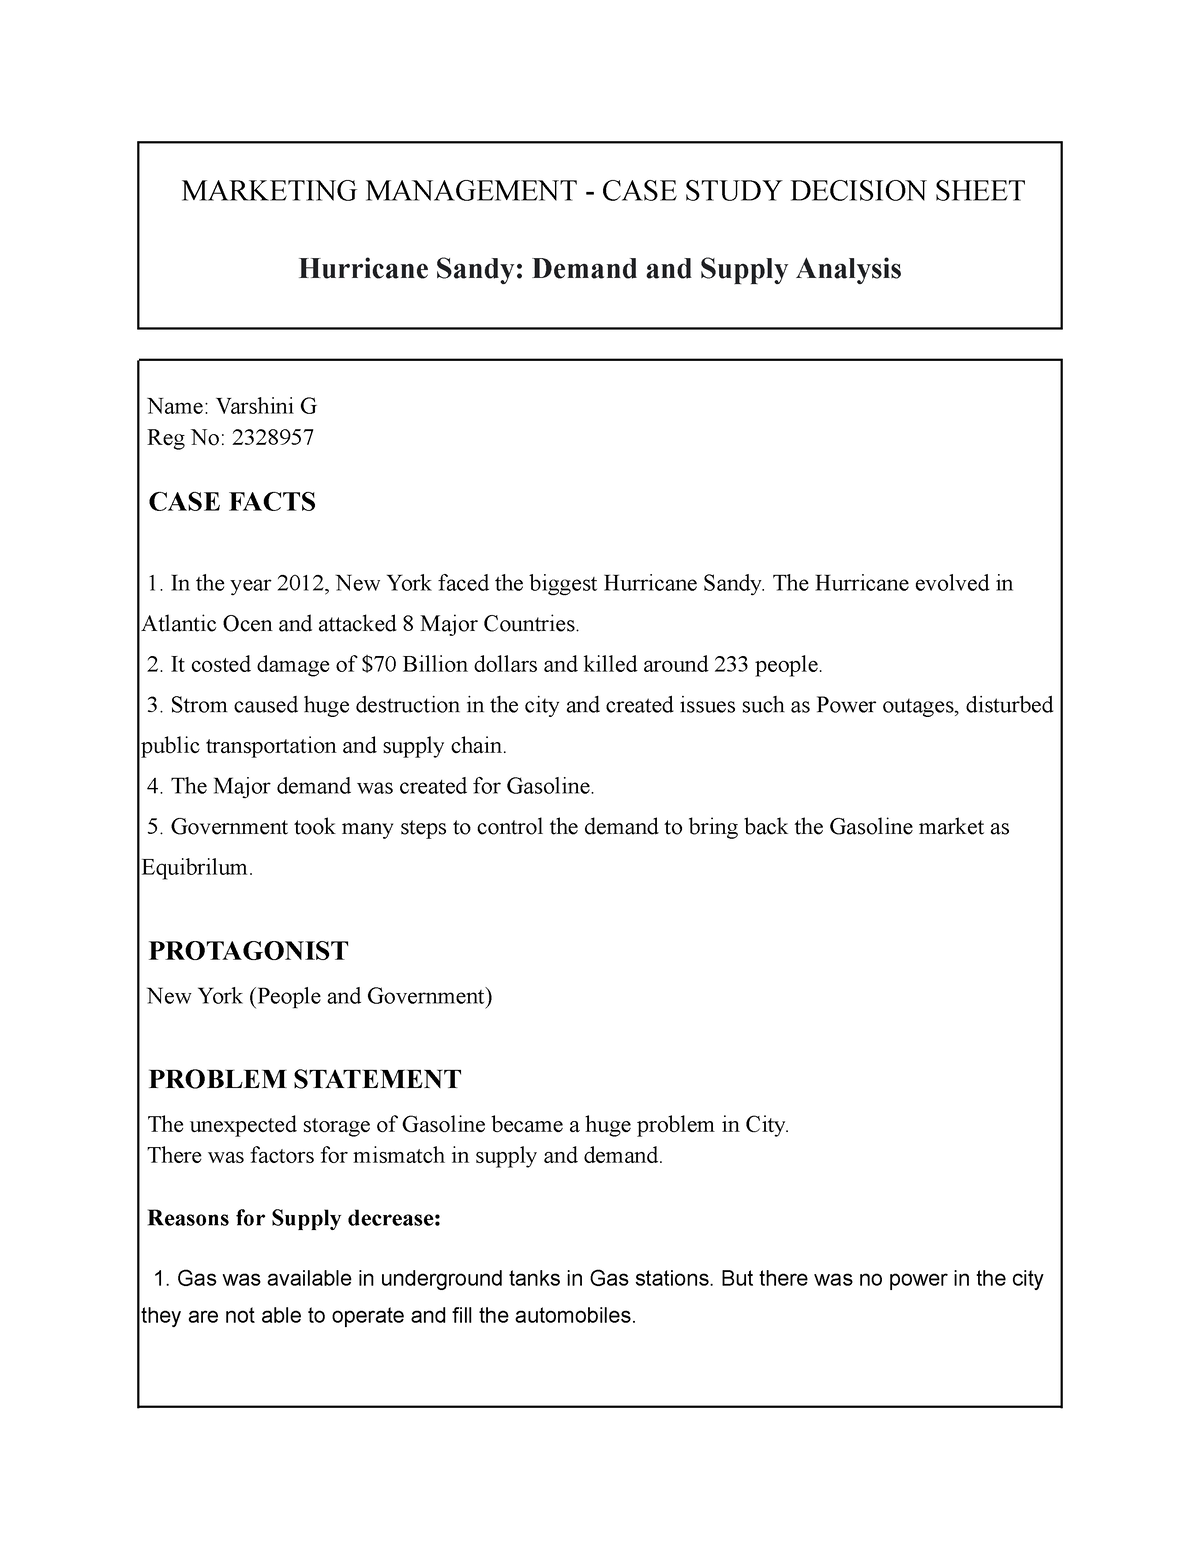 hurricane sandy case study decision sheet